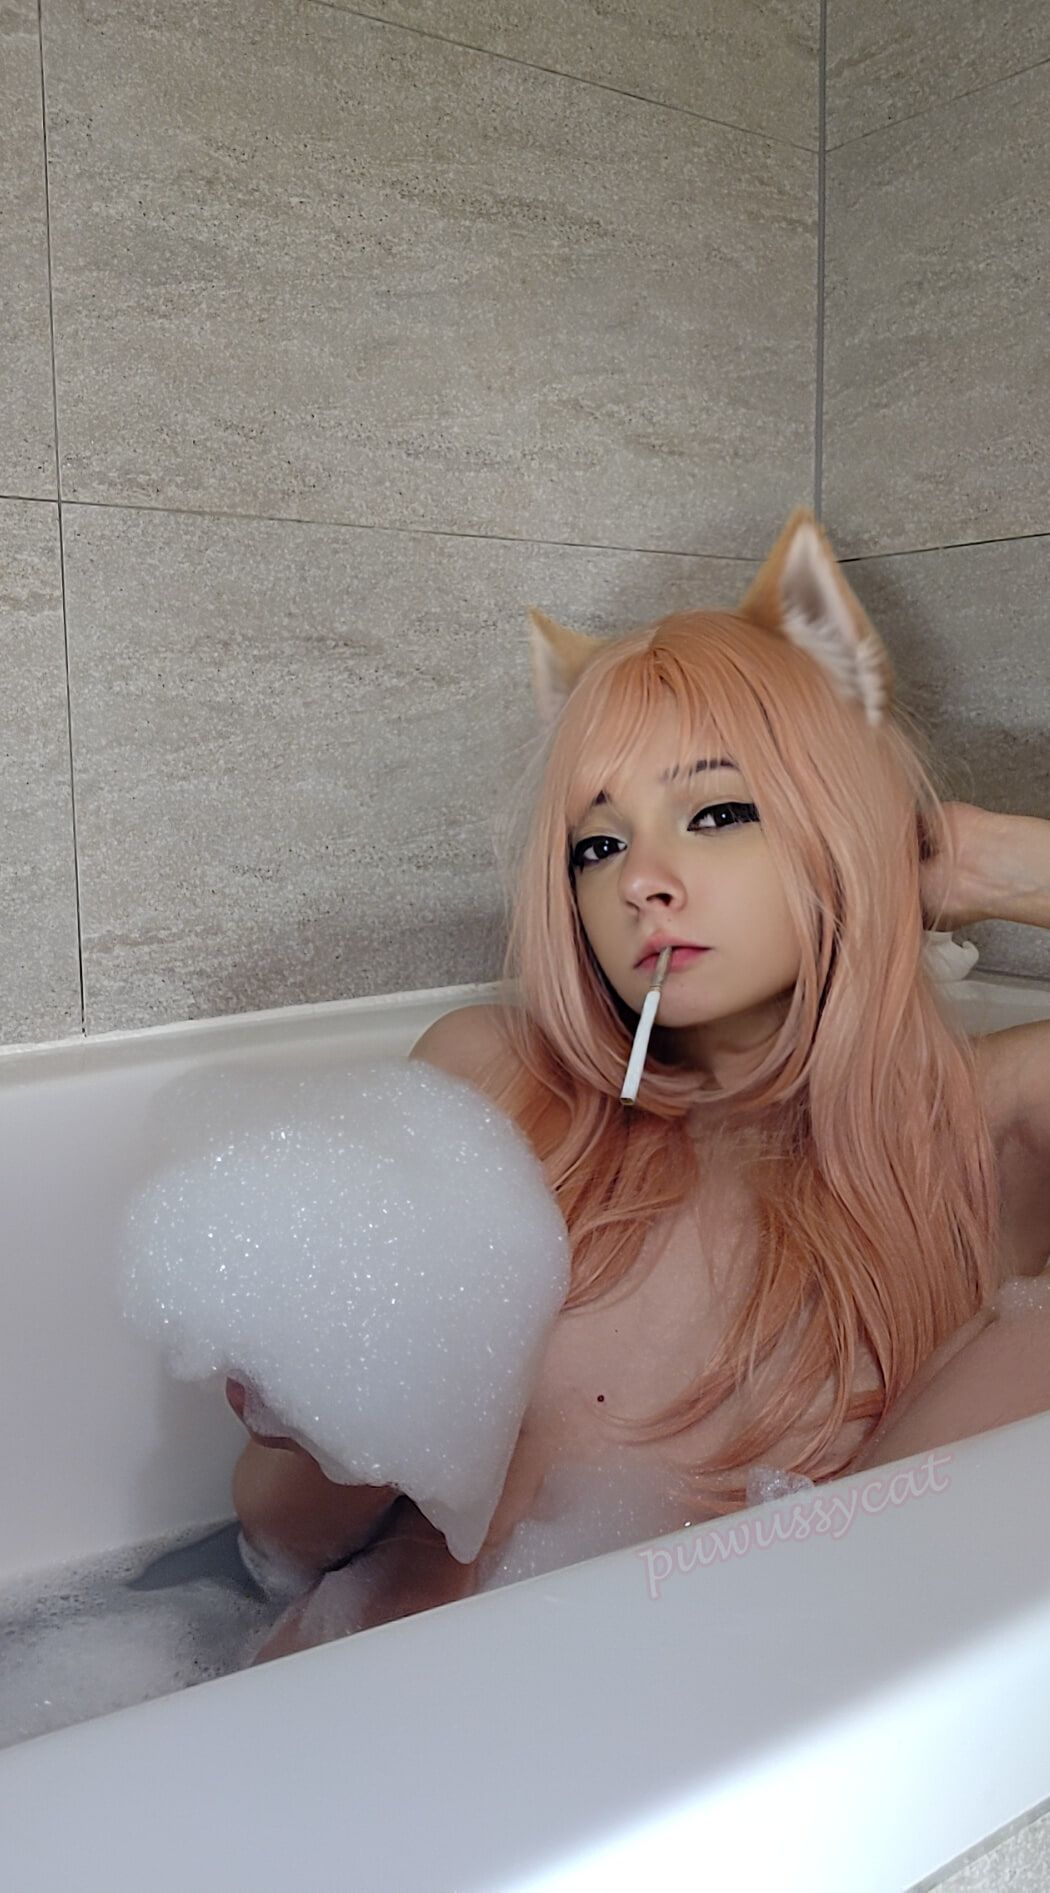 Egirl smoking in bathtub with bubbles #5